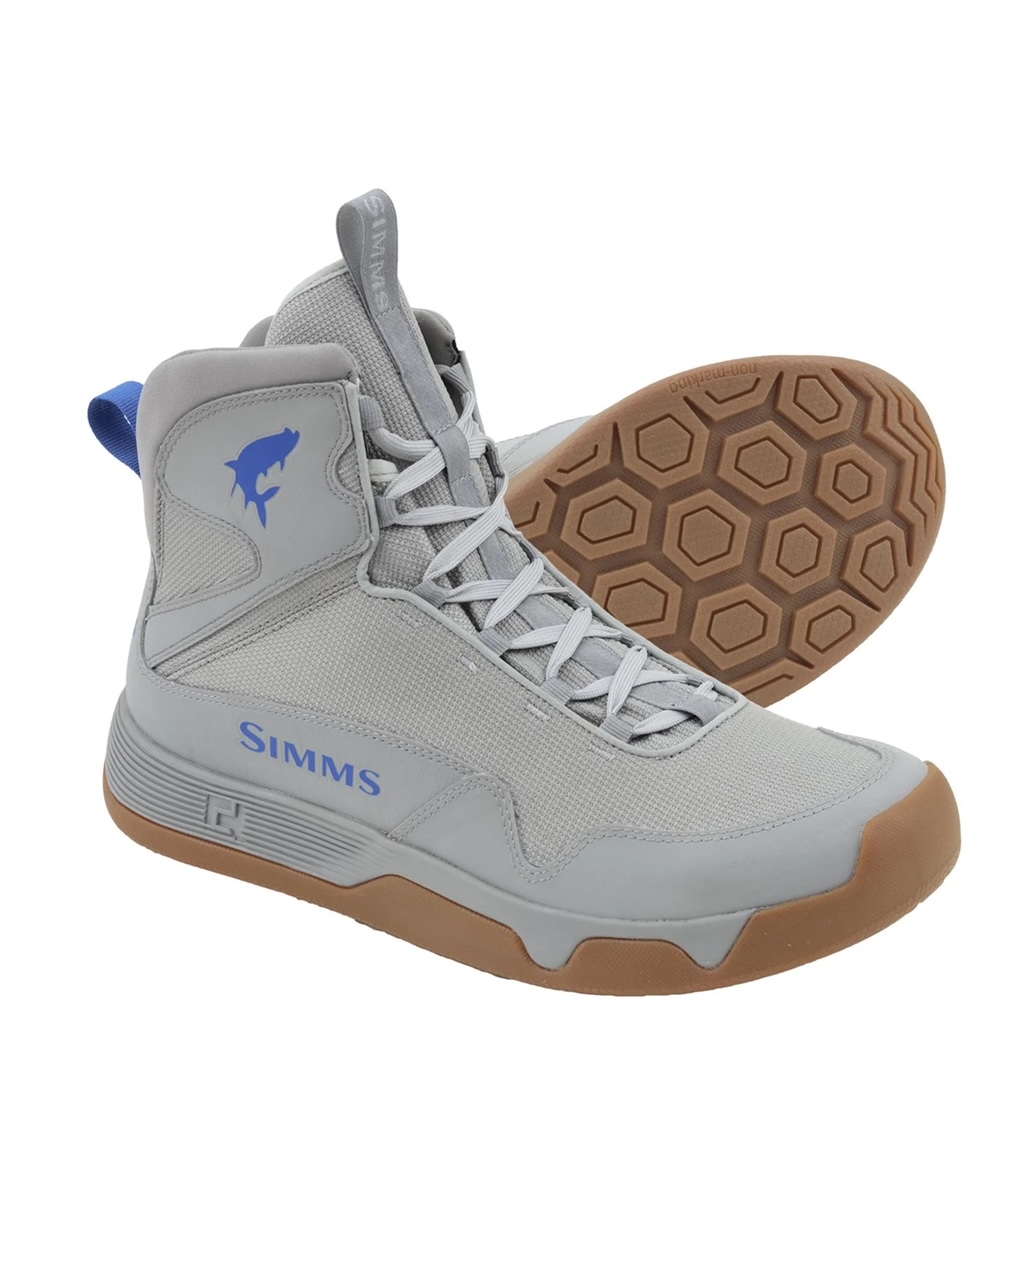 Simms Flats Sneaker Size 8